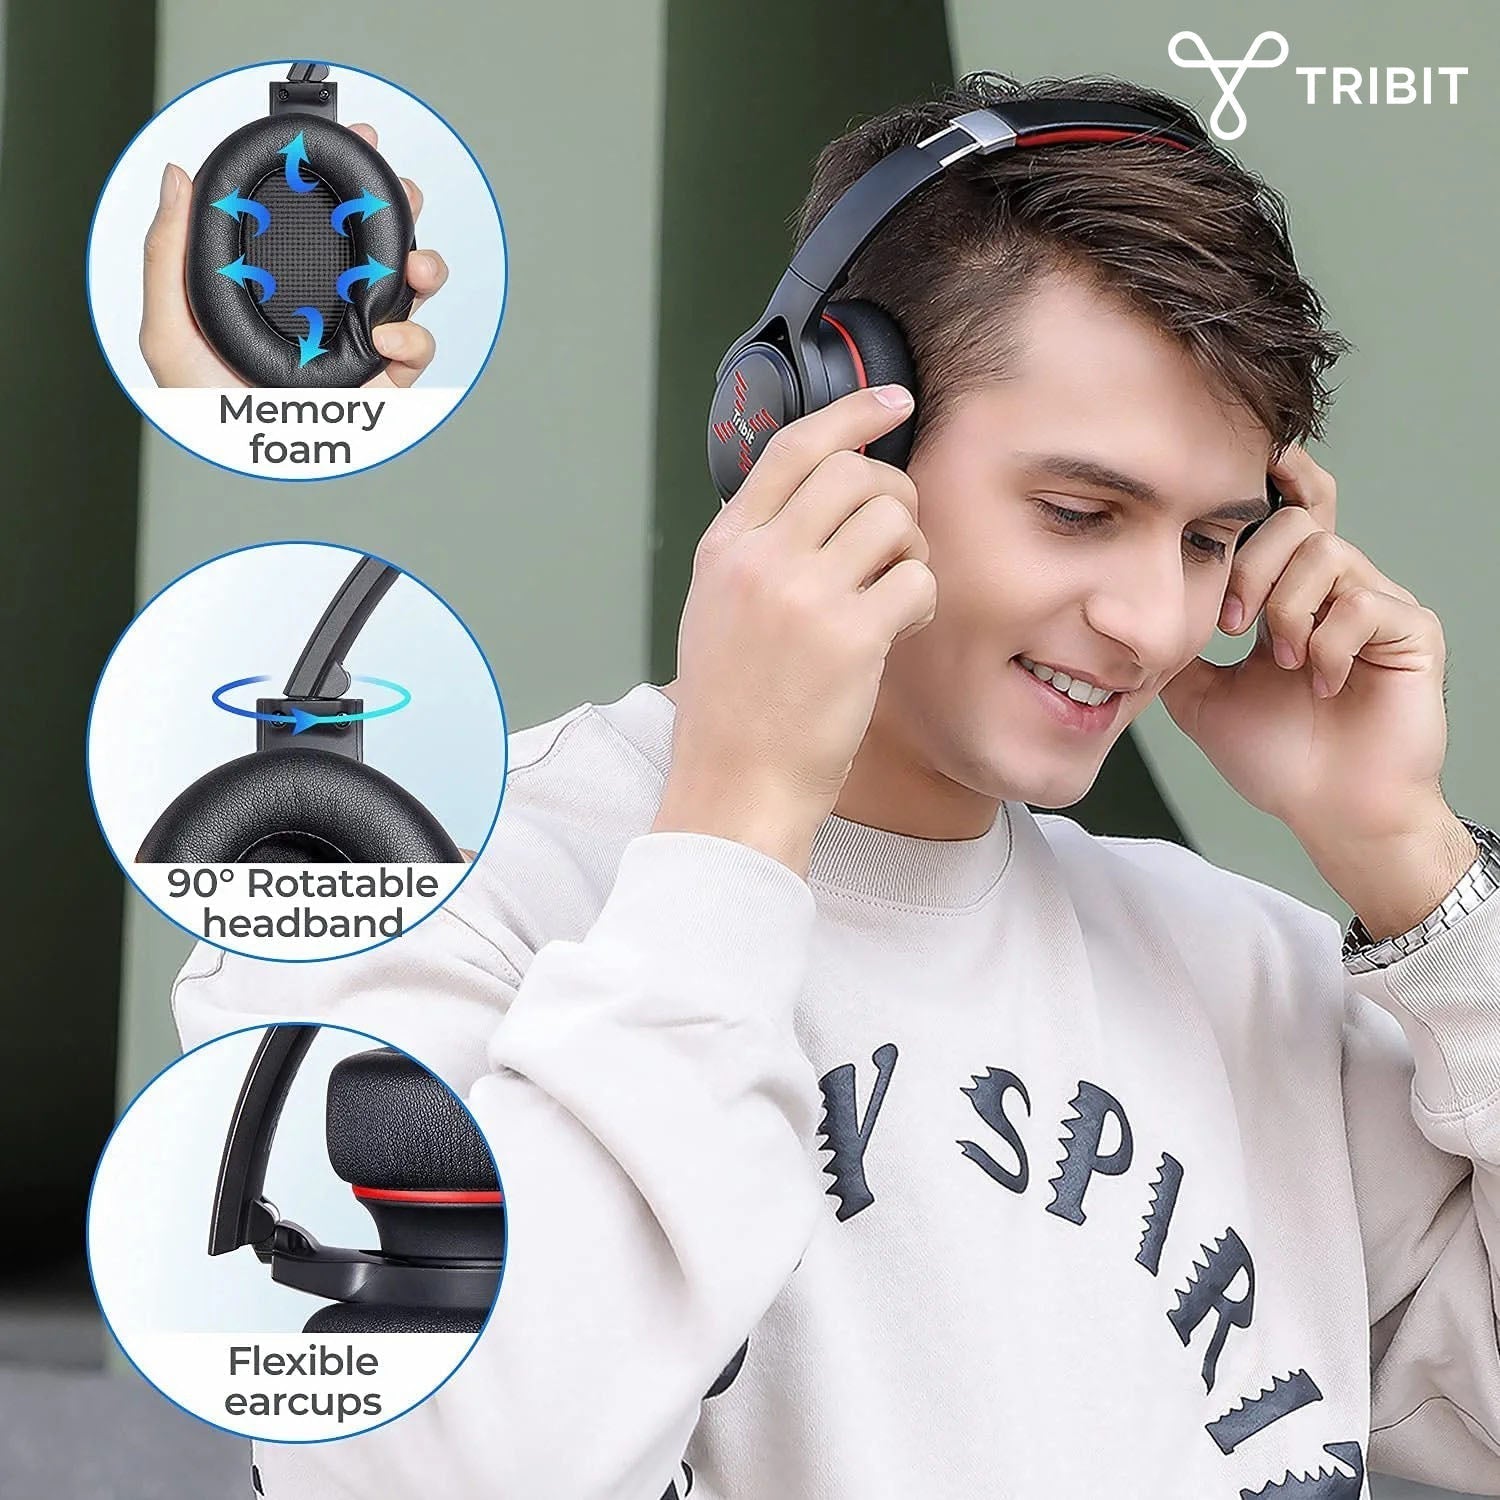 Tribit BTH-71 XFree Go Bluetooth V5.0 True Wireless Headphone (Type-C) - Black